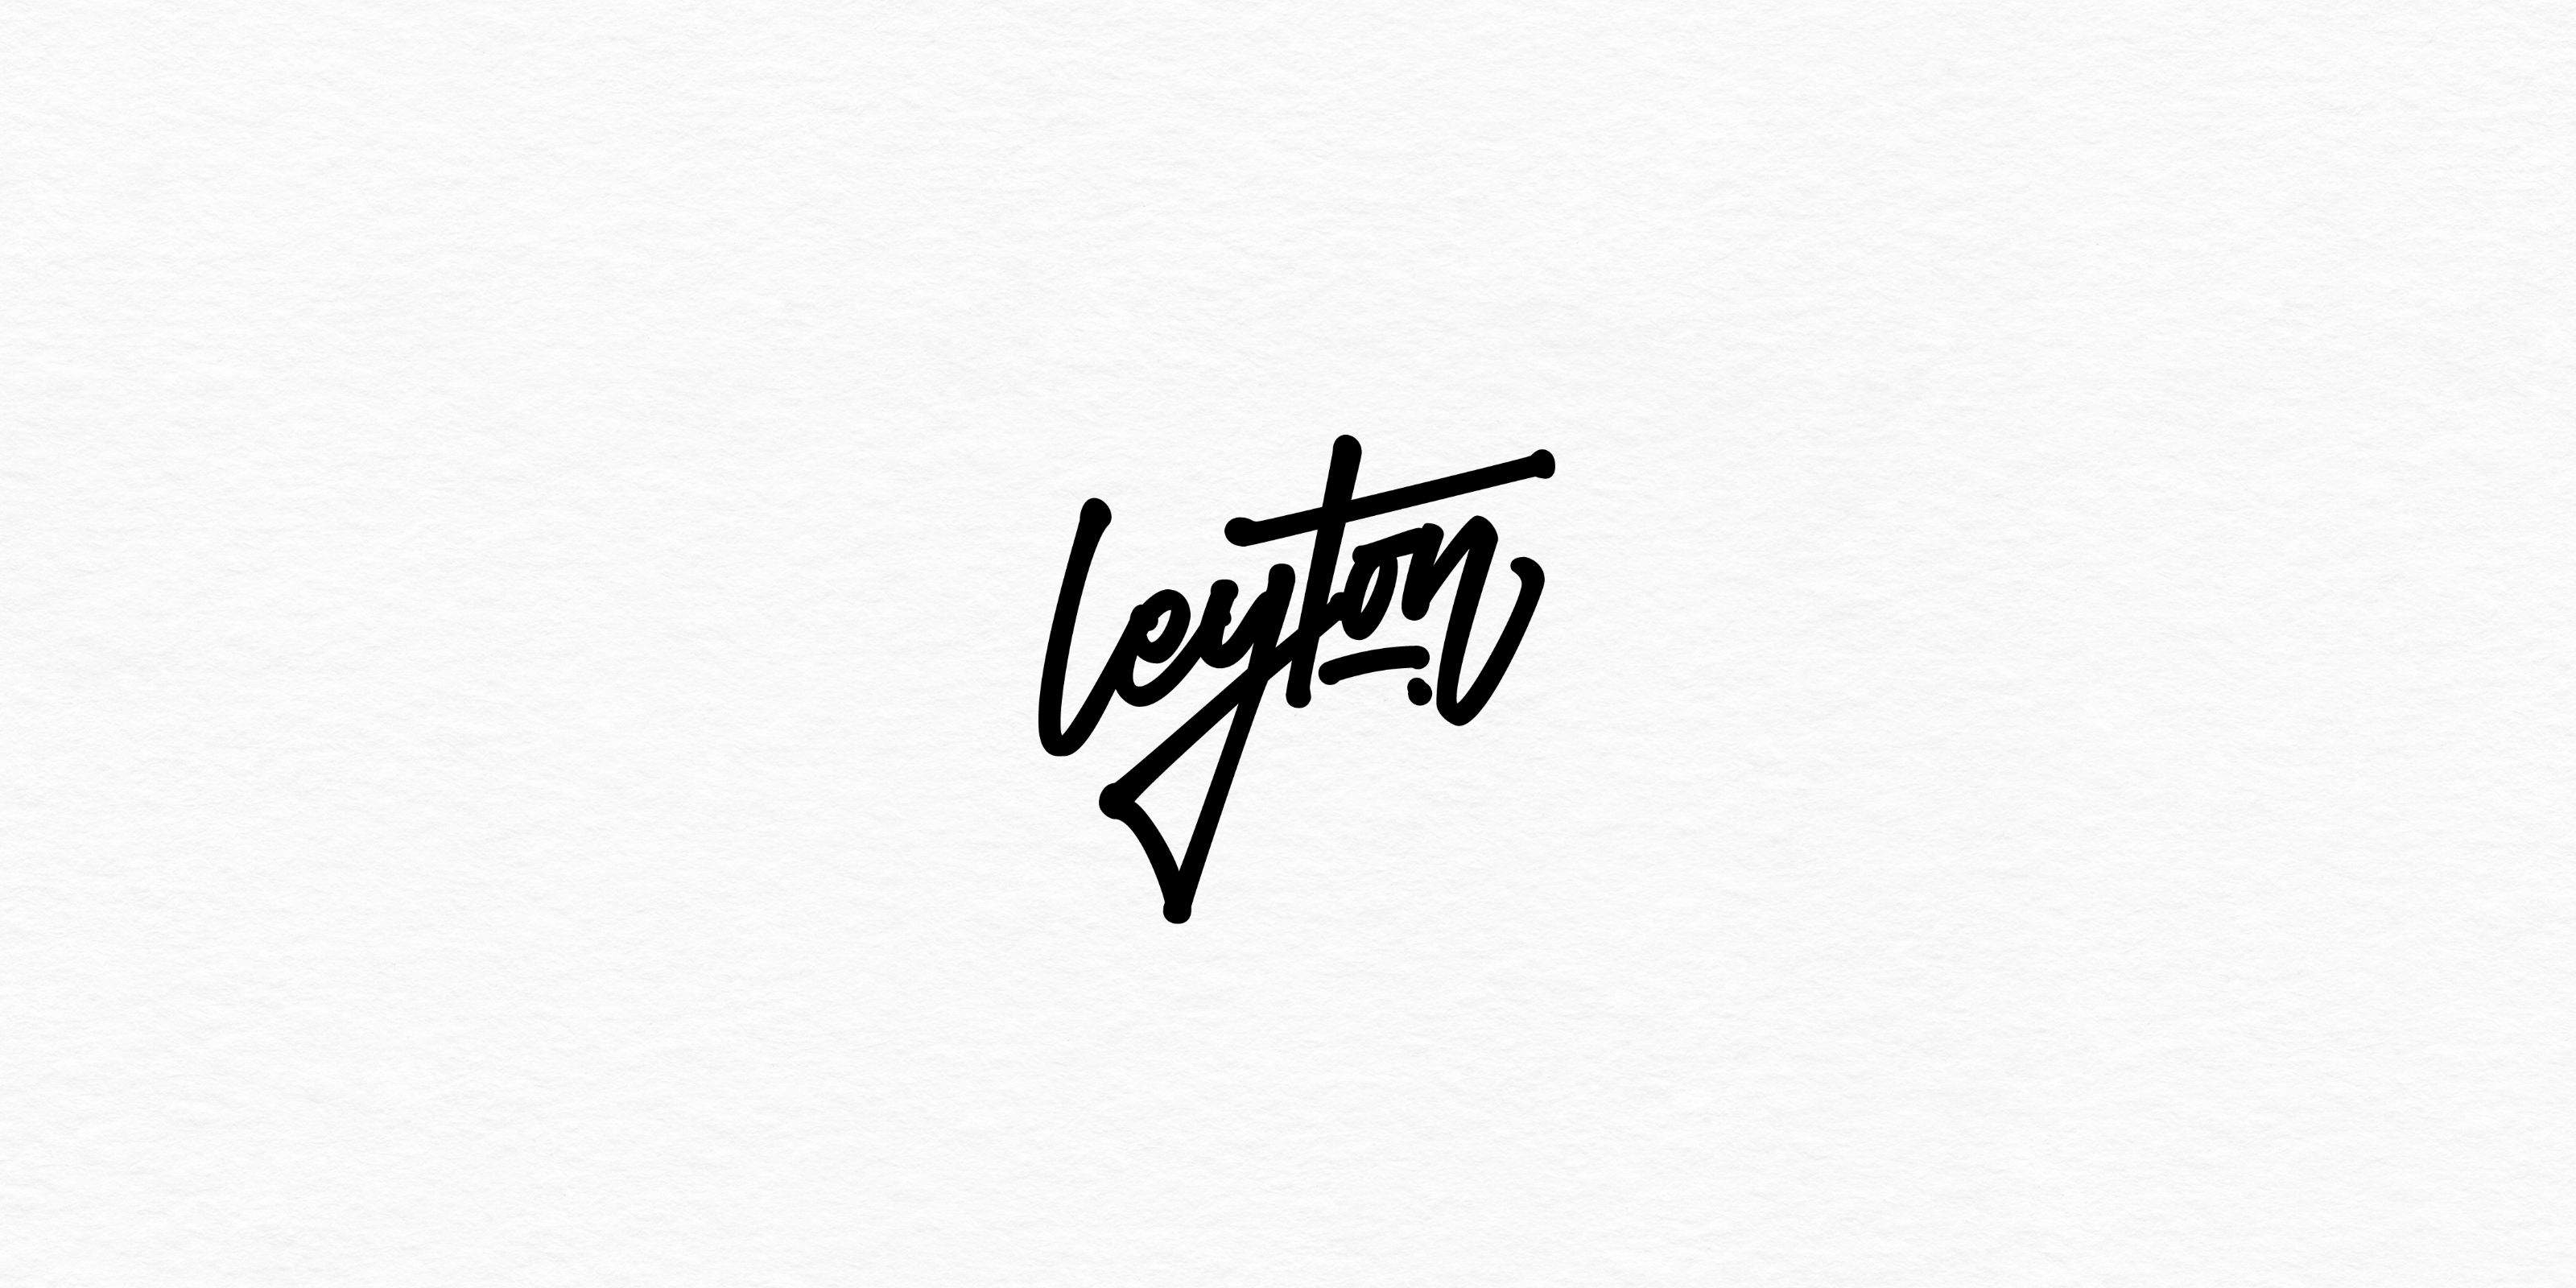 Graffiti styled logo leyton